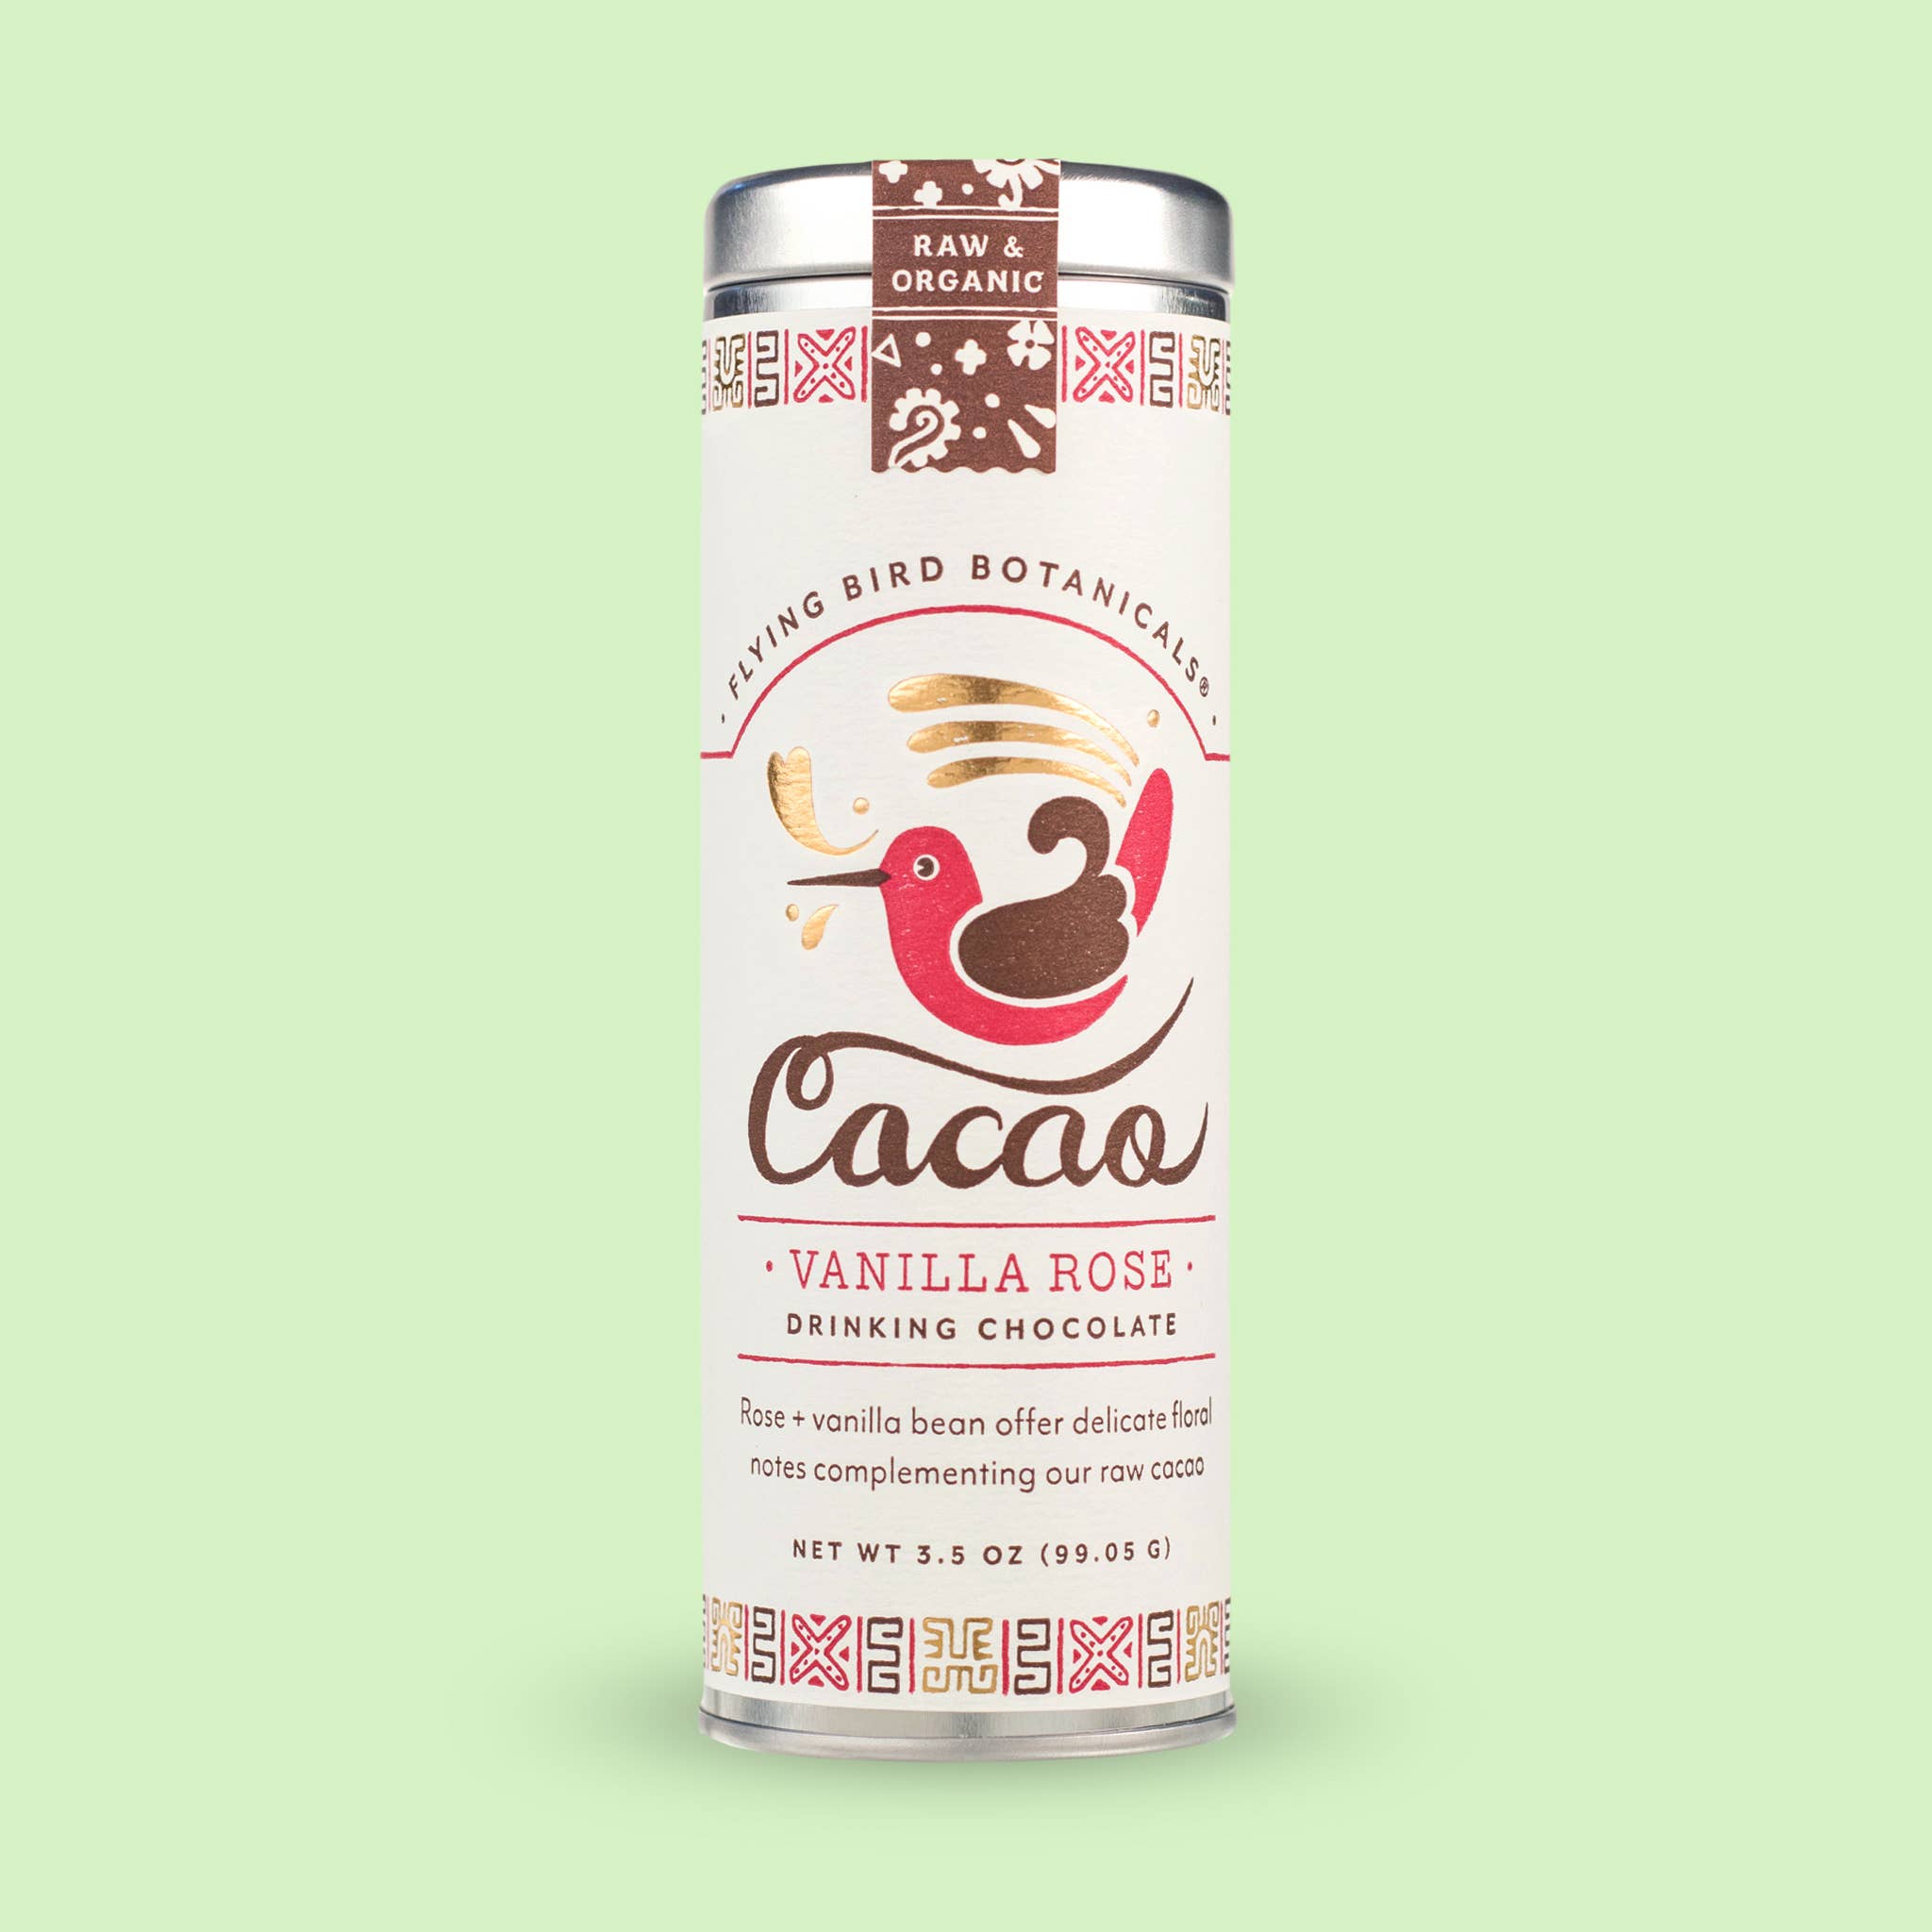 Flying Bird Botanicals - Vanilla Rose Cacao Drinking Chocolate